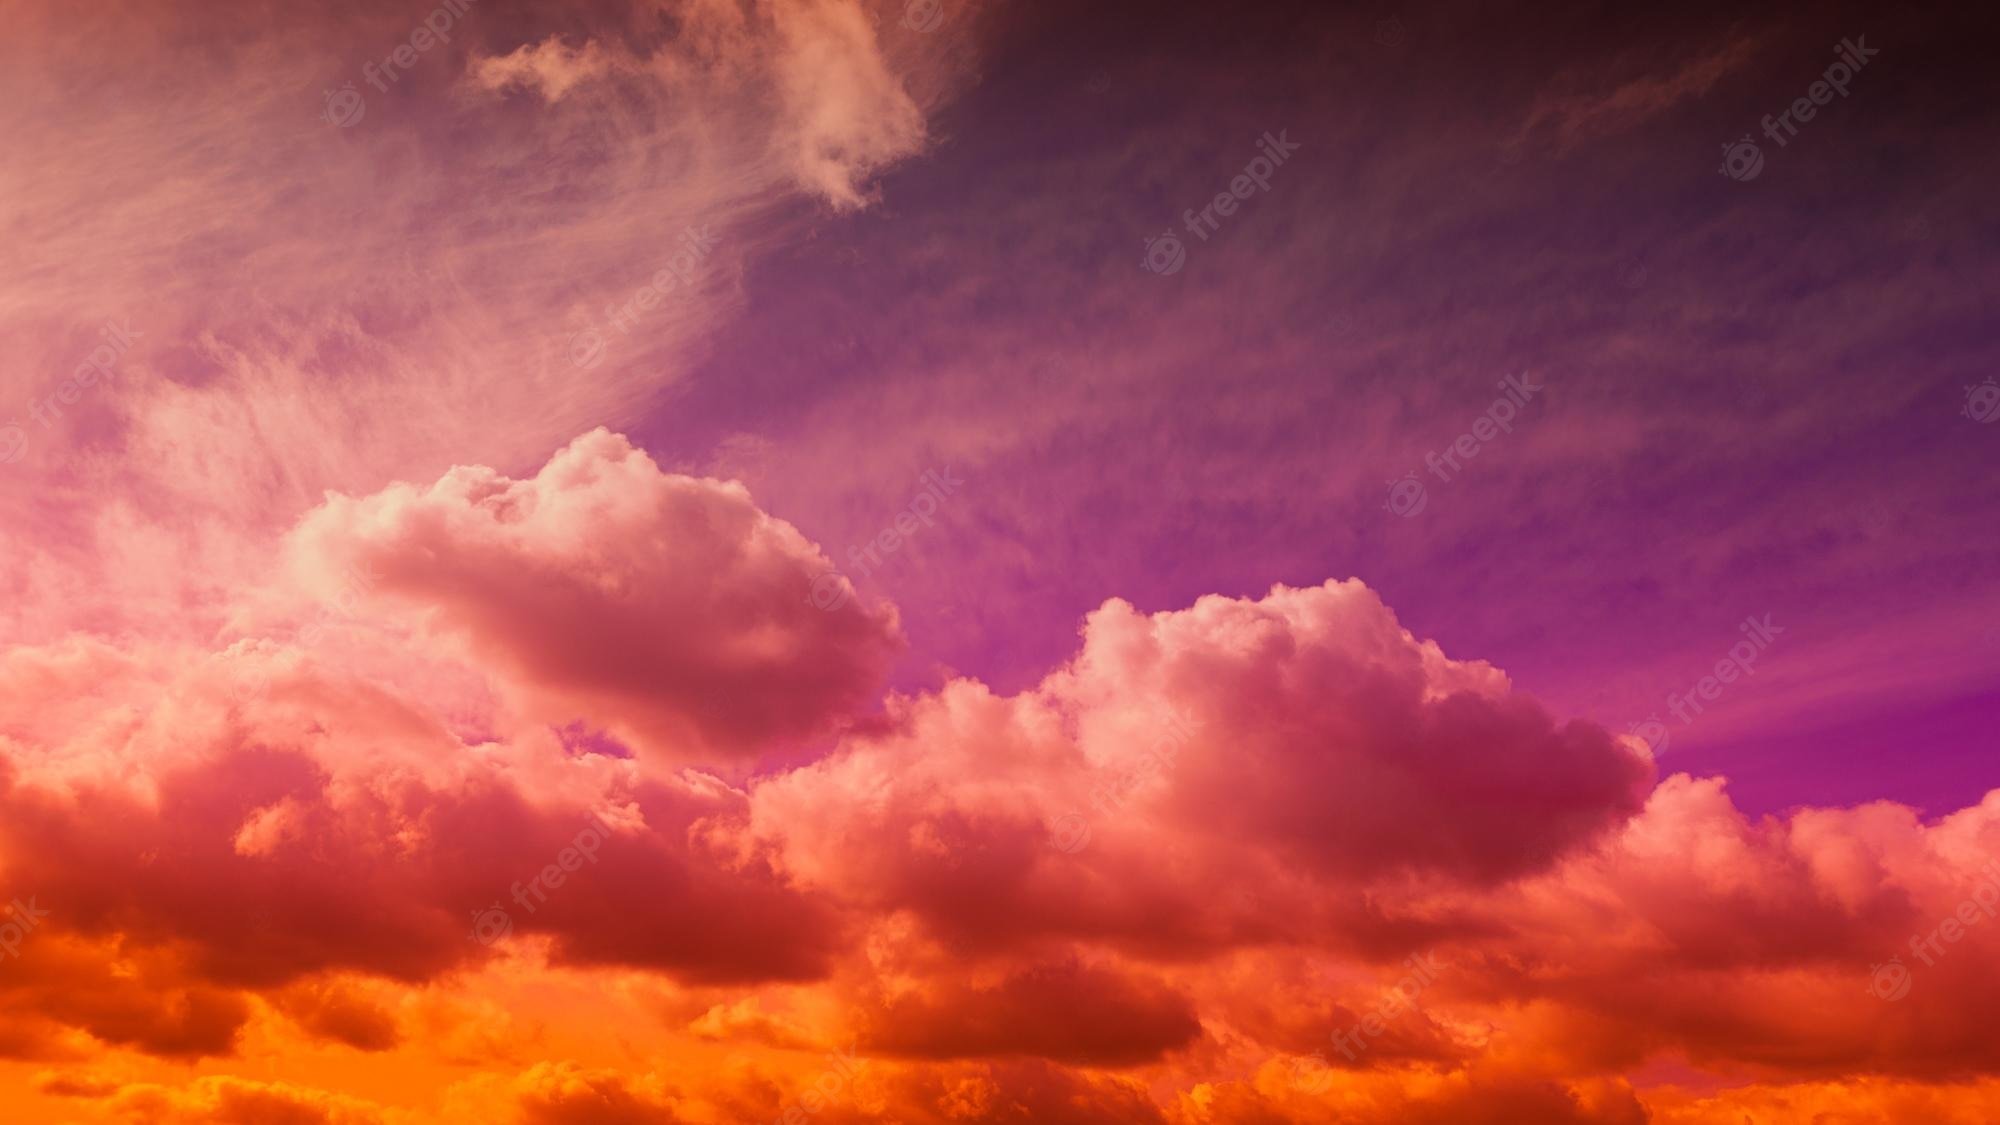 Premium Photo. Beautiful vivid coral purple orange sky wallpaper at sunset with clouds darmatic sunshine sky beautiful view evening clouds fast moving away